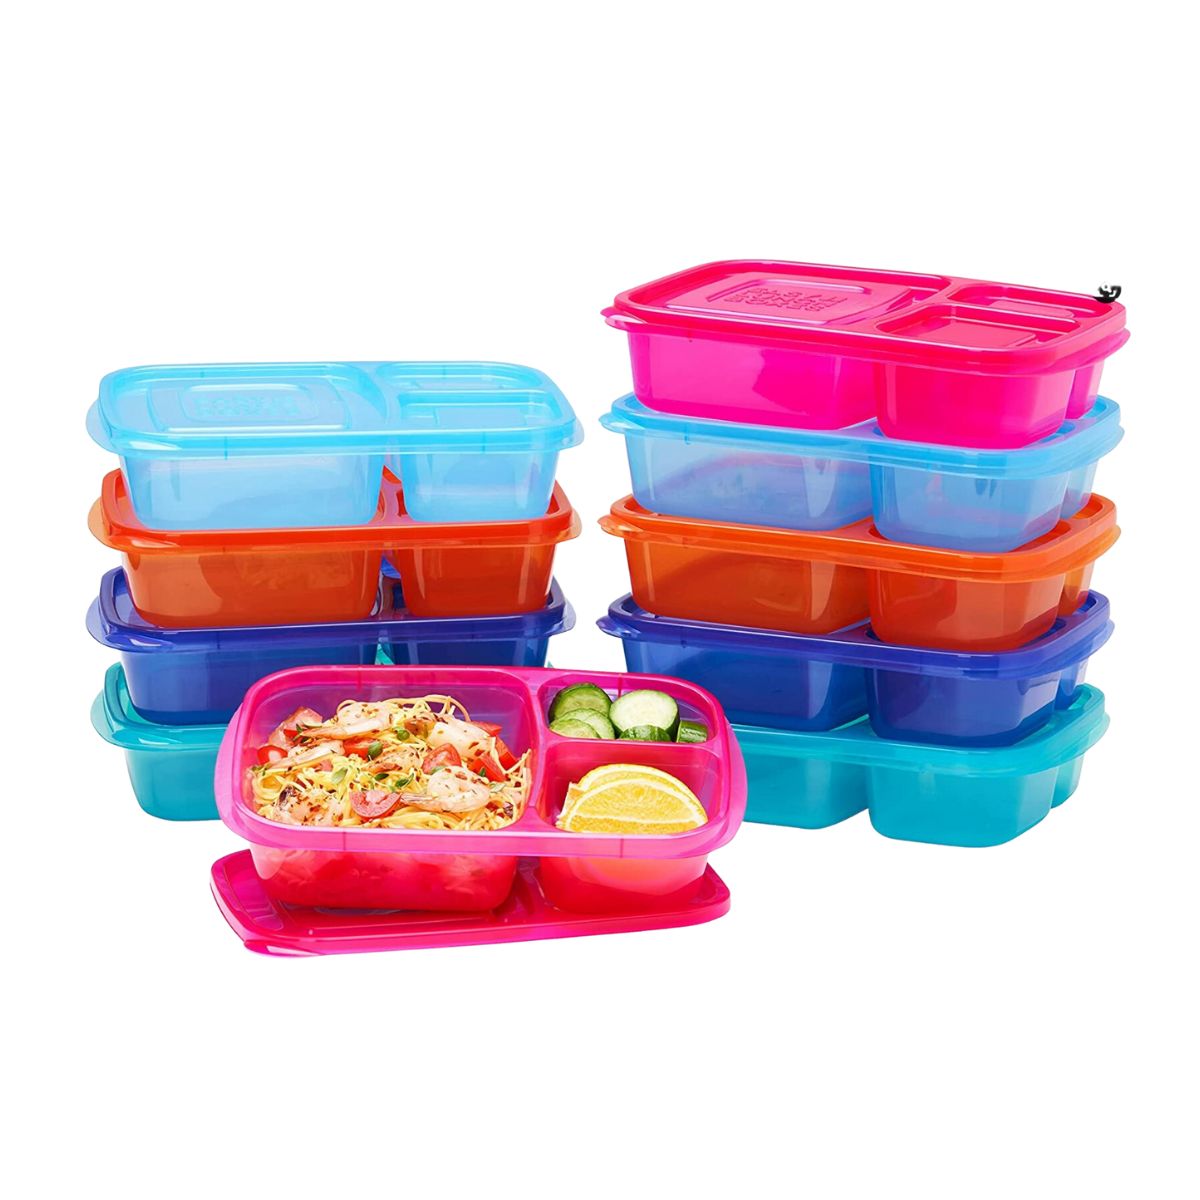 Plastic ziploc brand bento boxes with lids in multiple colors